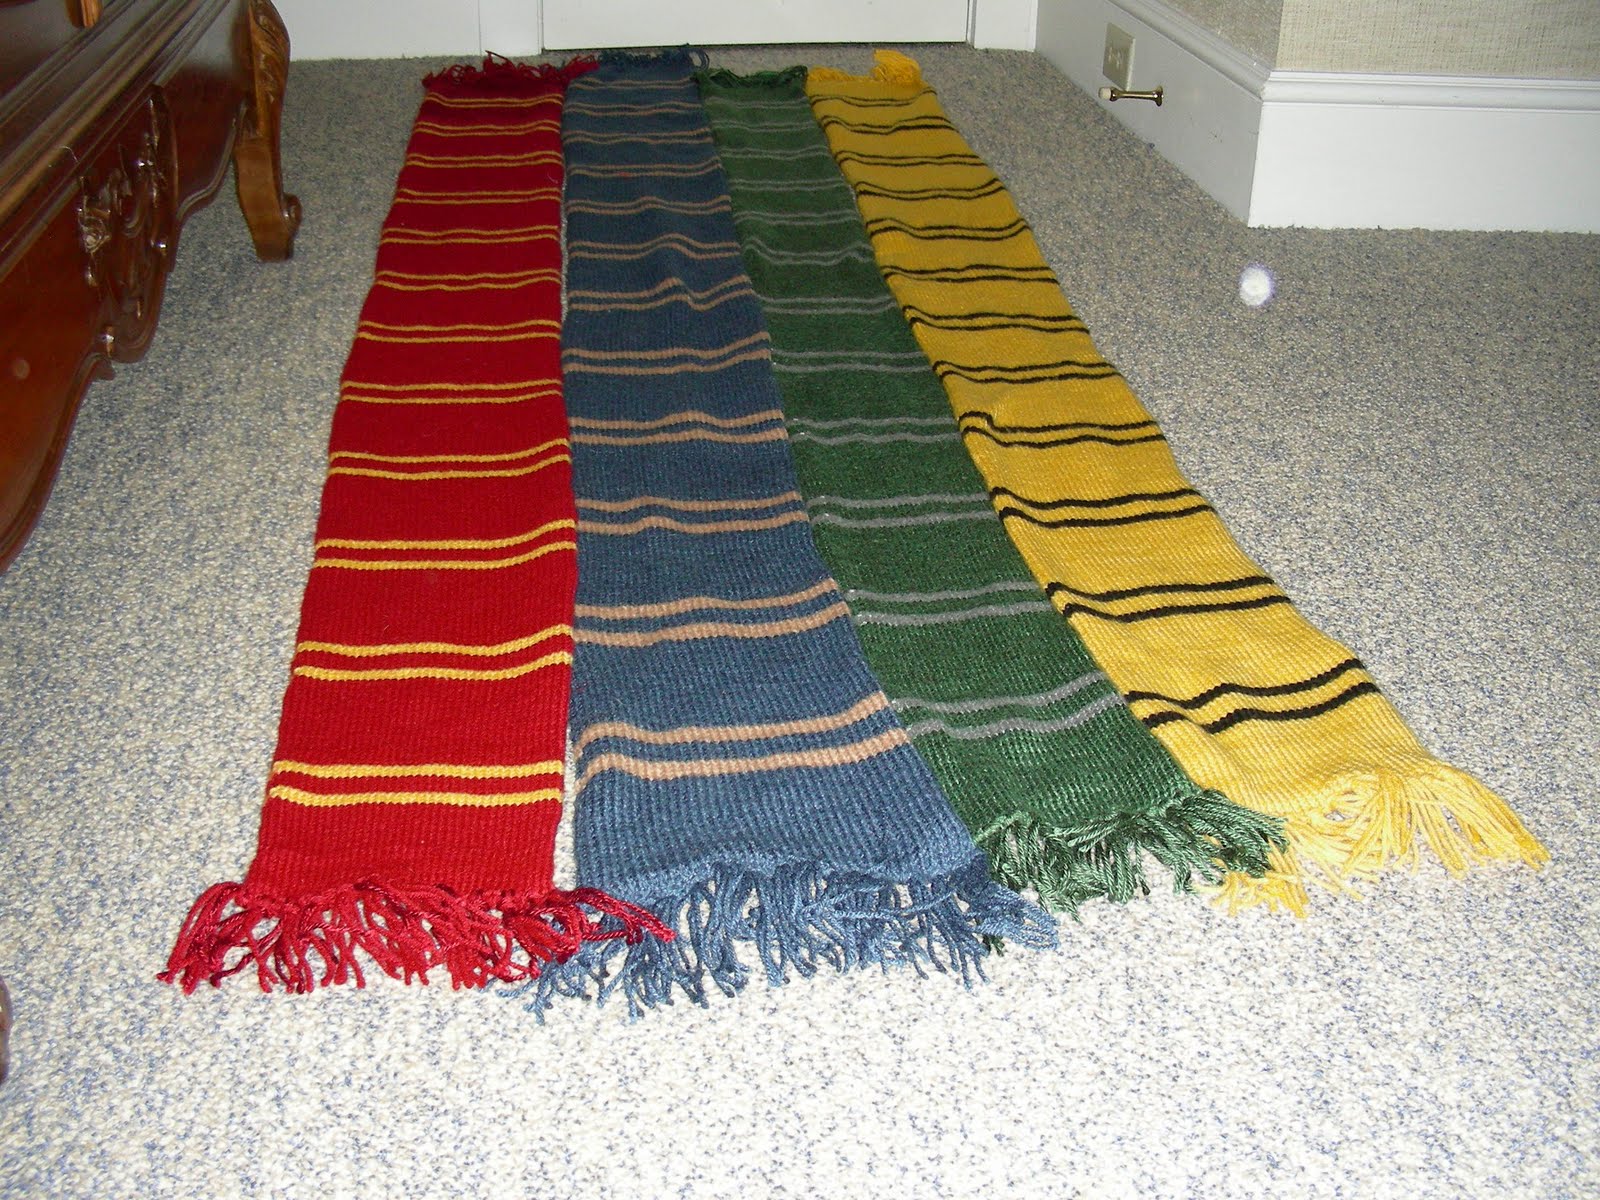 Harry Potter Gryffindor scarf by knitsplus on Etsy